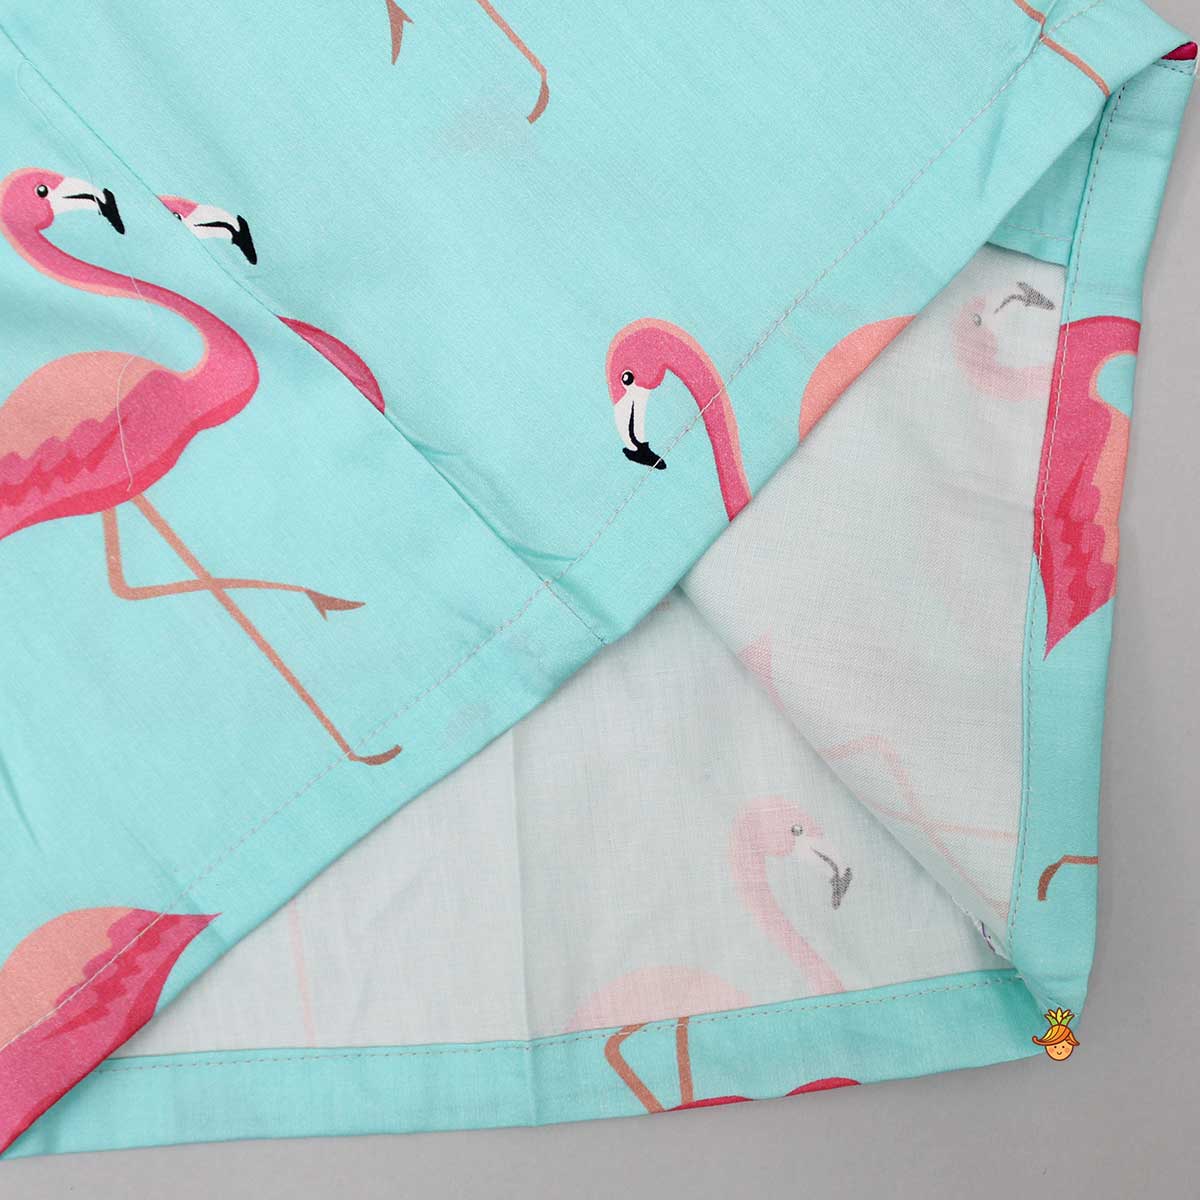 Flamingo Printed Sleepwear